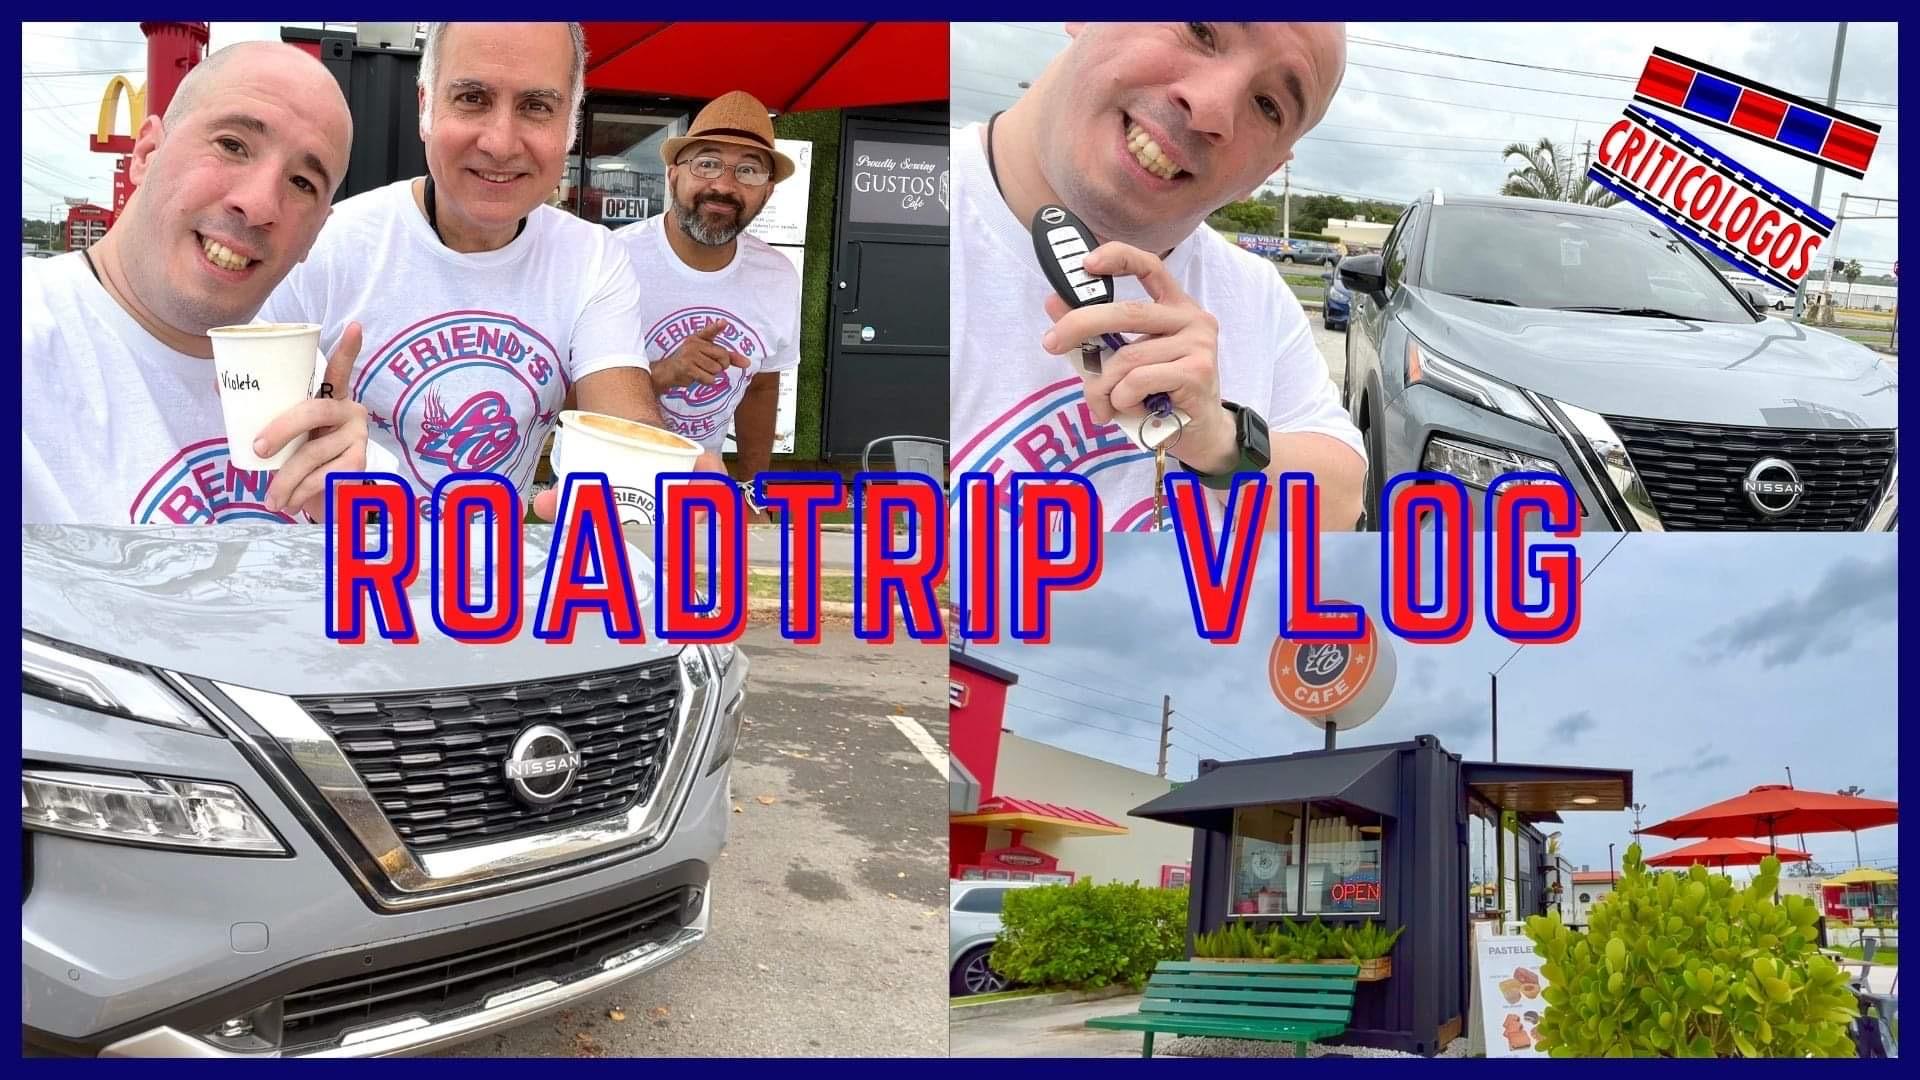 Vlog: Roadtrip with Nissan Rogue / Friend’s Cafe. #Vlog #FriendsCafe #Mayaguez #PuertoRico #NissanRogue